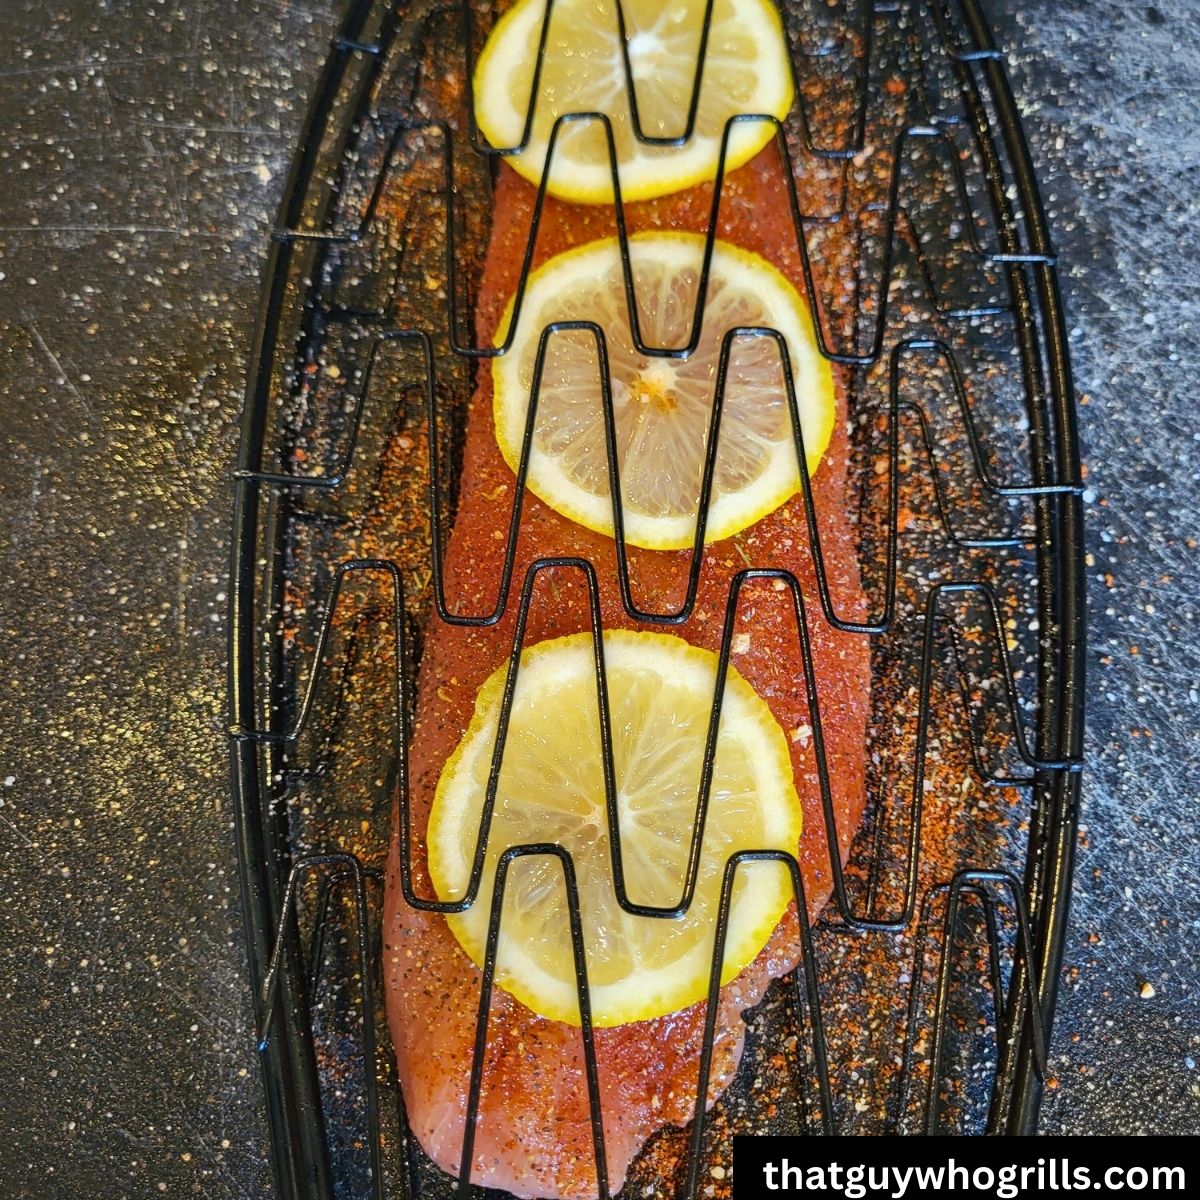 Salmon fillet seasoned with lemon slices in fish basket before grilling